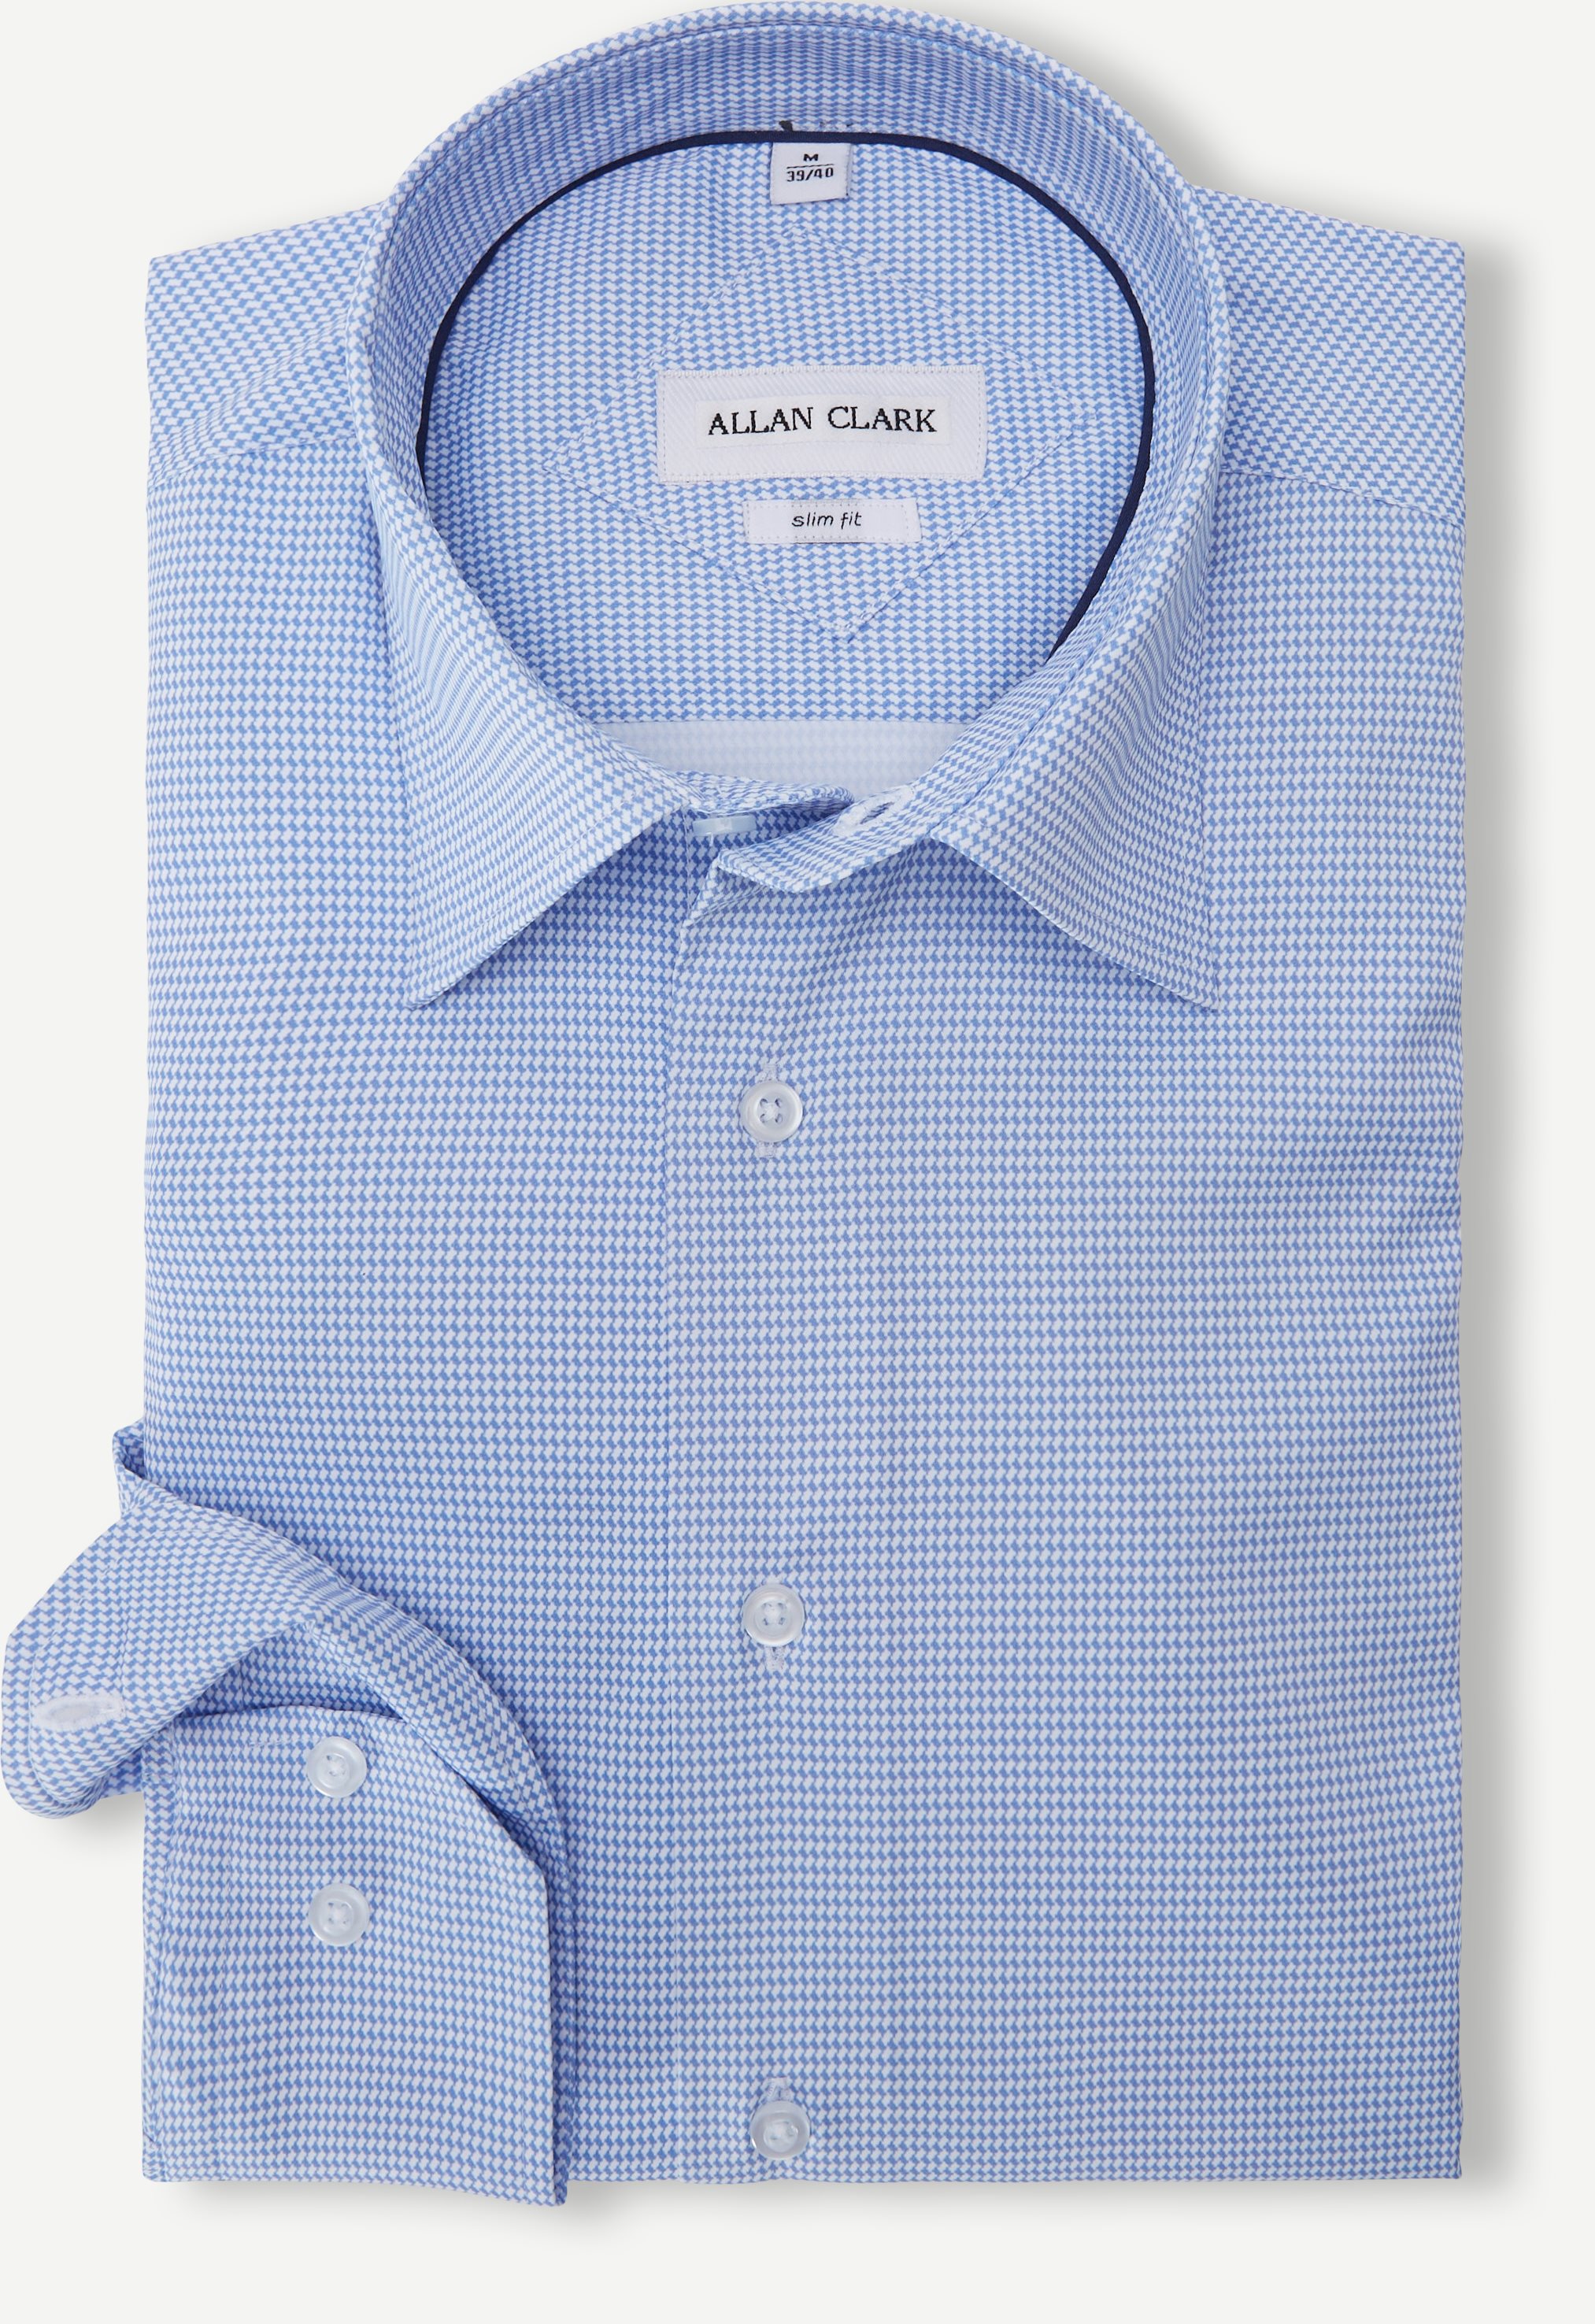 Allan Clark Shirts JONES  4WAY STRETCH Blue